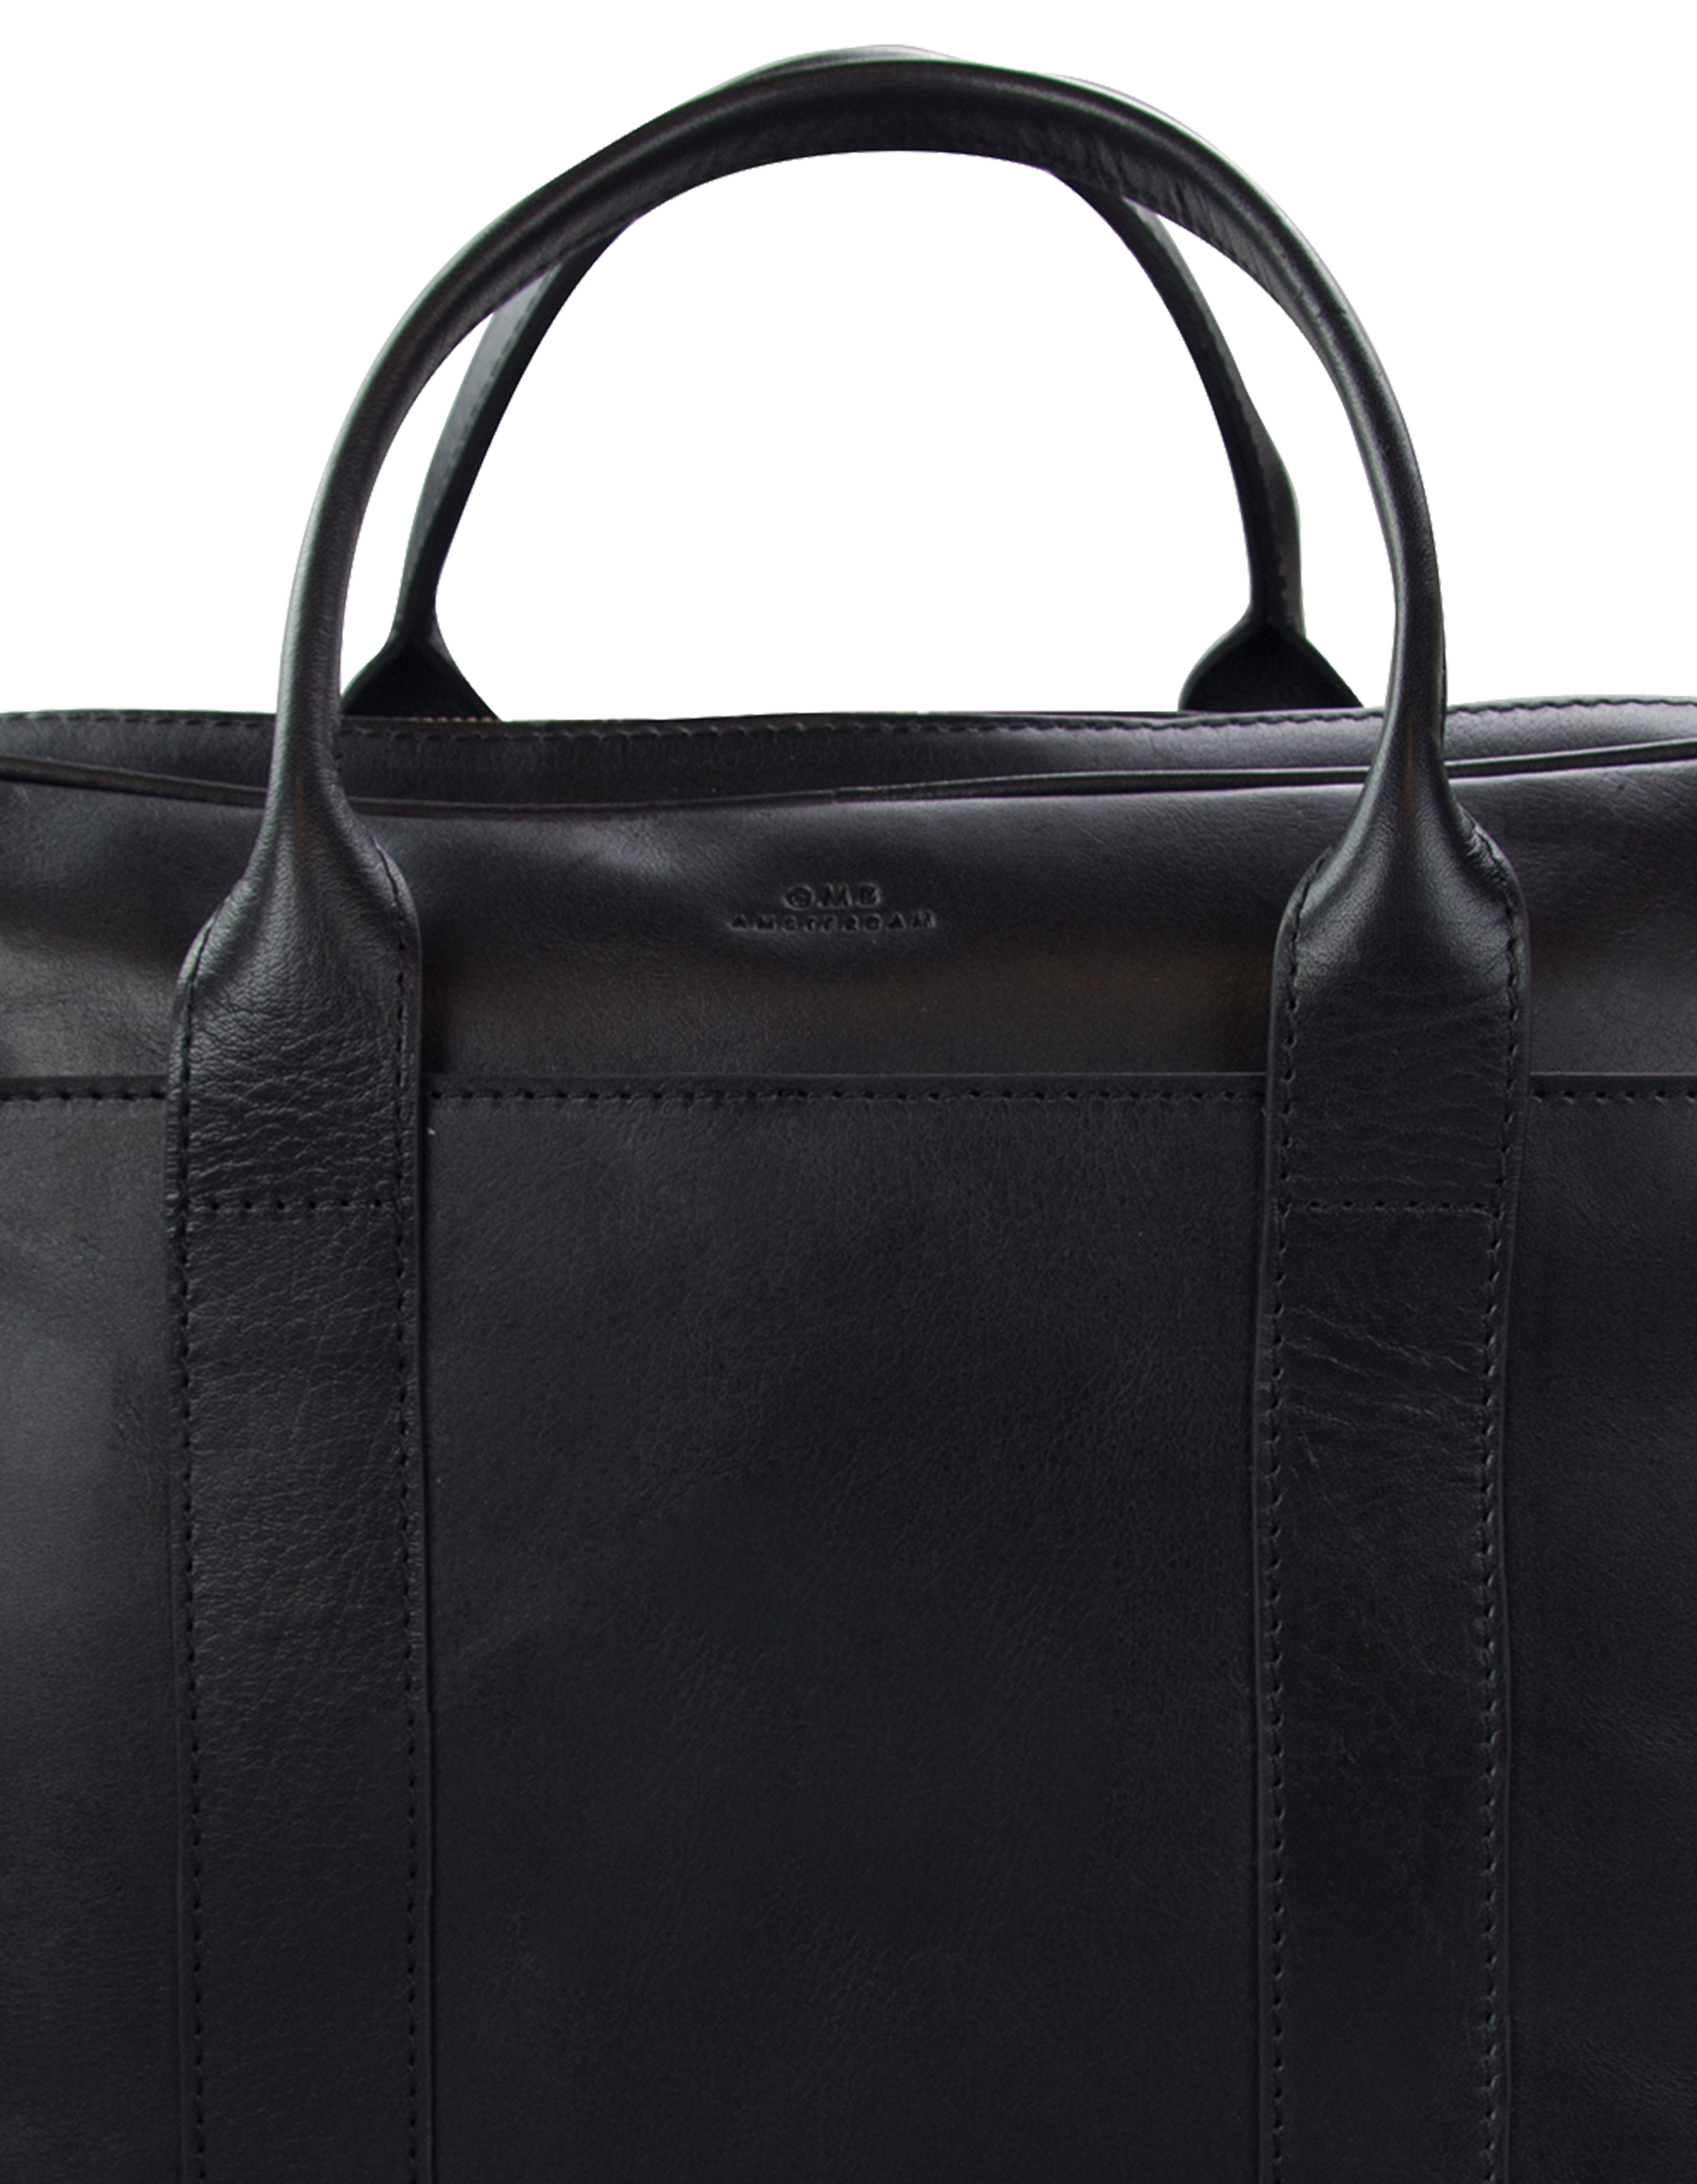  Leather business bag. Close up shot